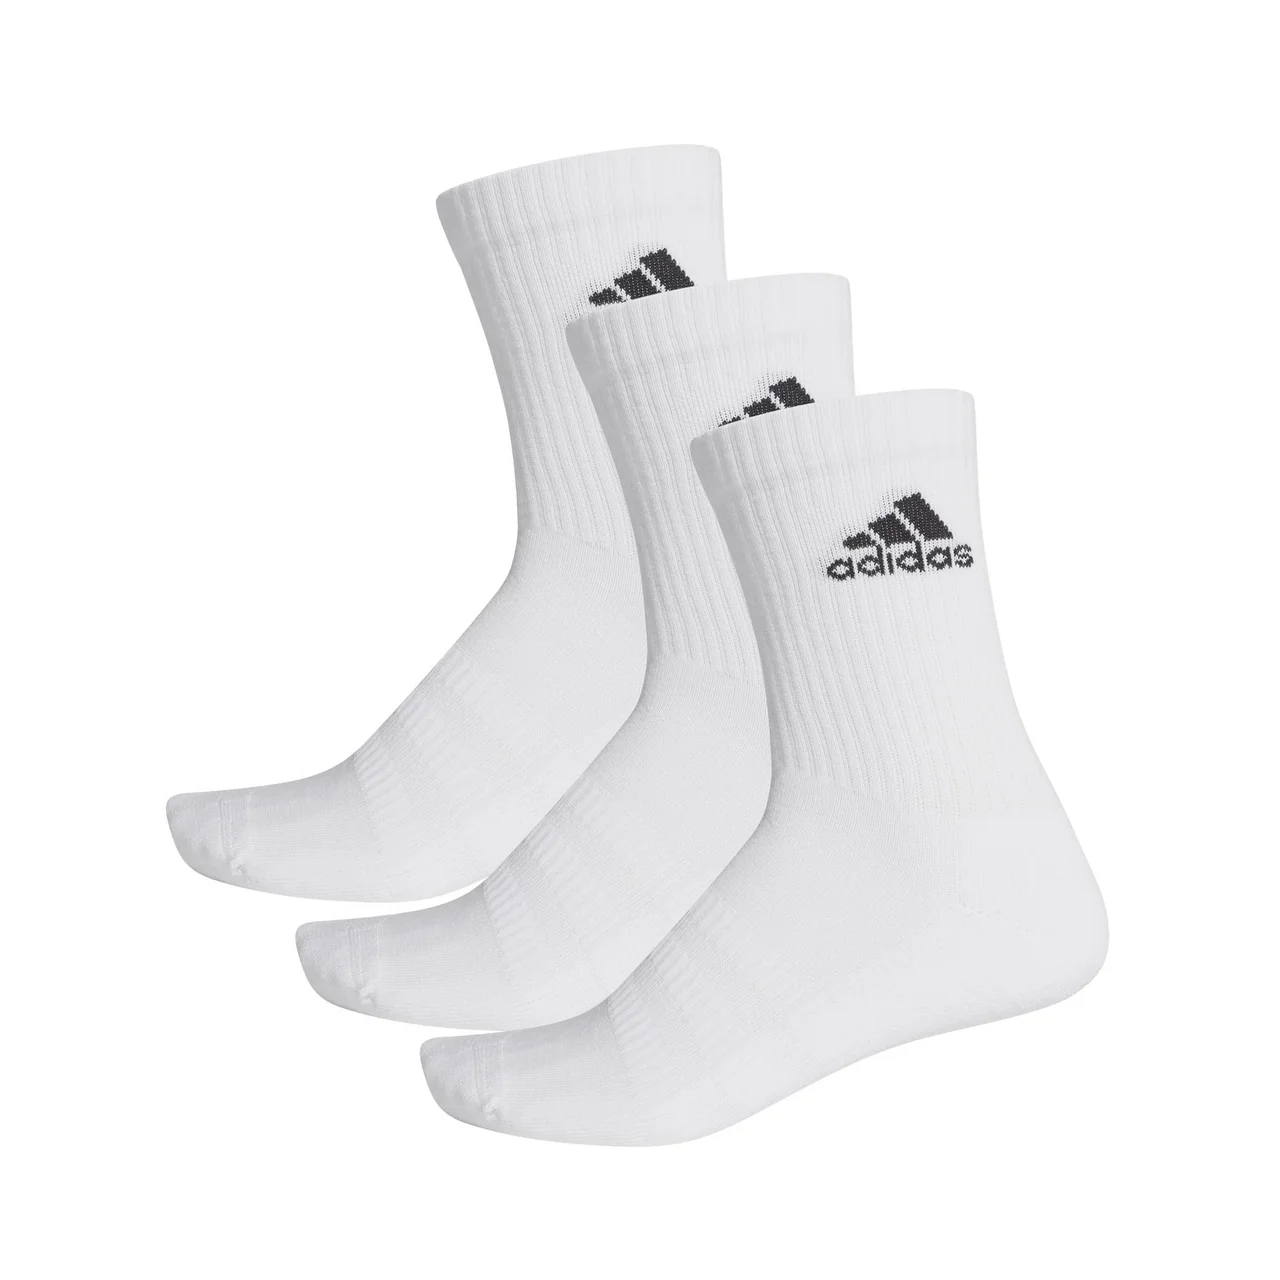 Adidas 3-Stripes Performance Crew Socks 3-Pack